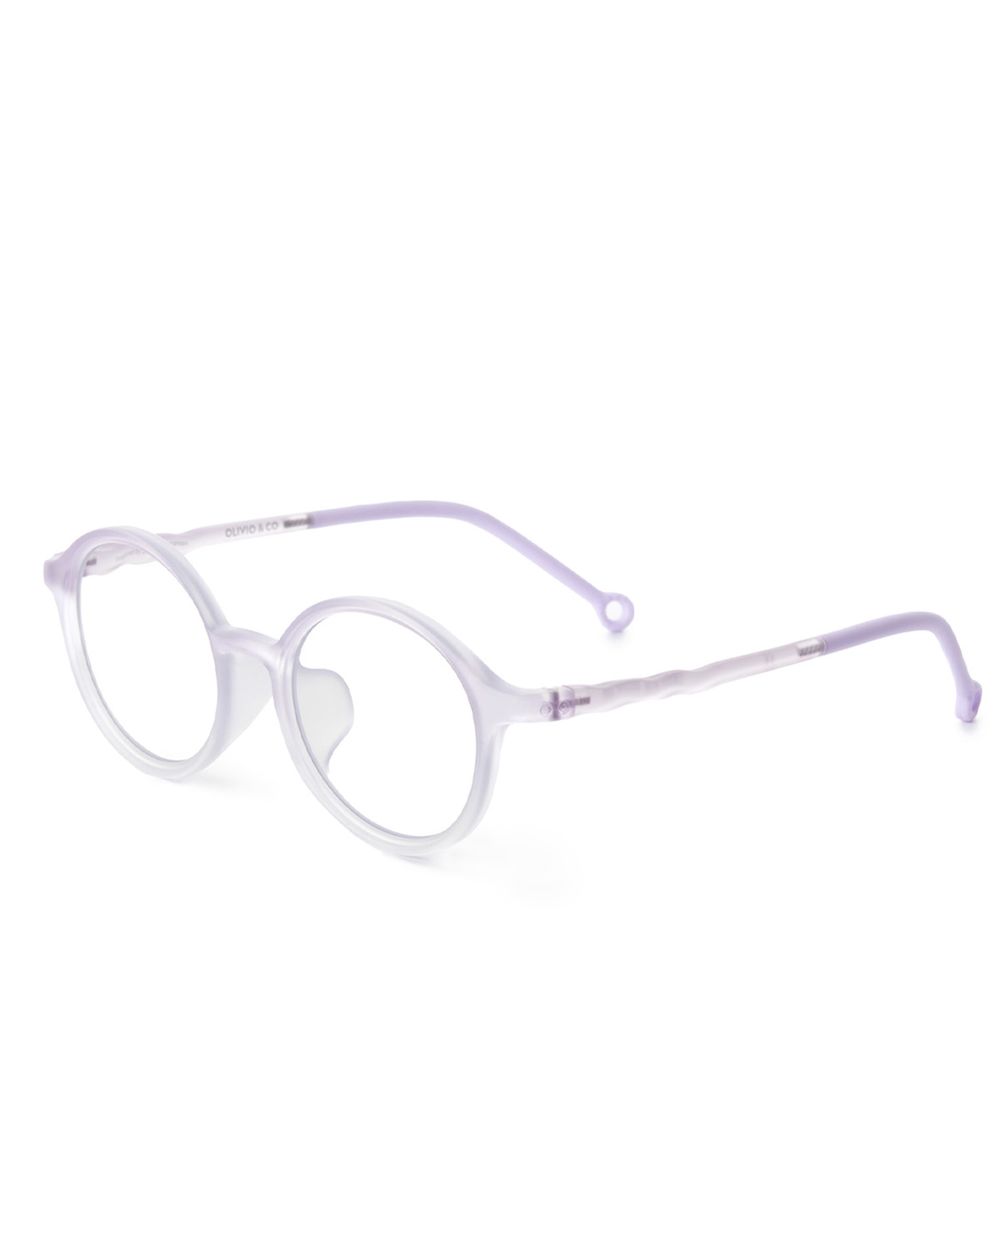 Kids Oval Screen Glasses Tranquil Lavender